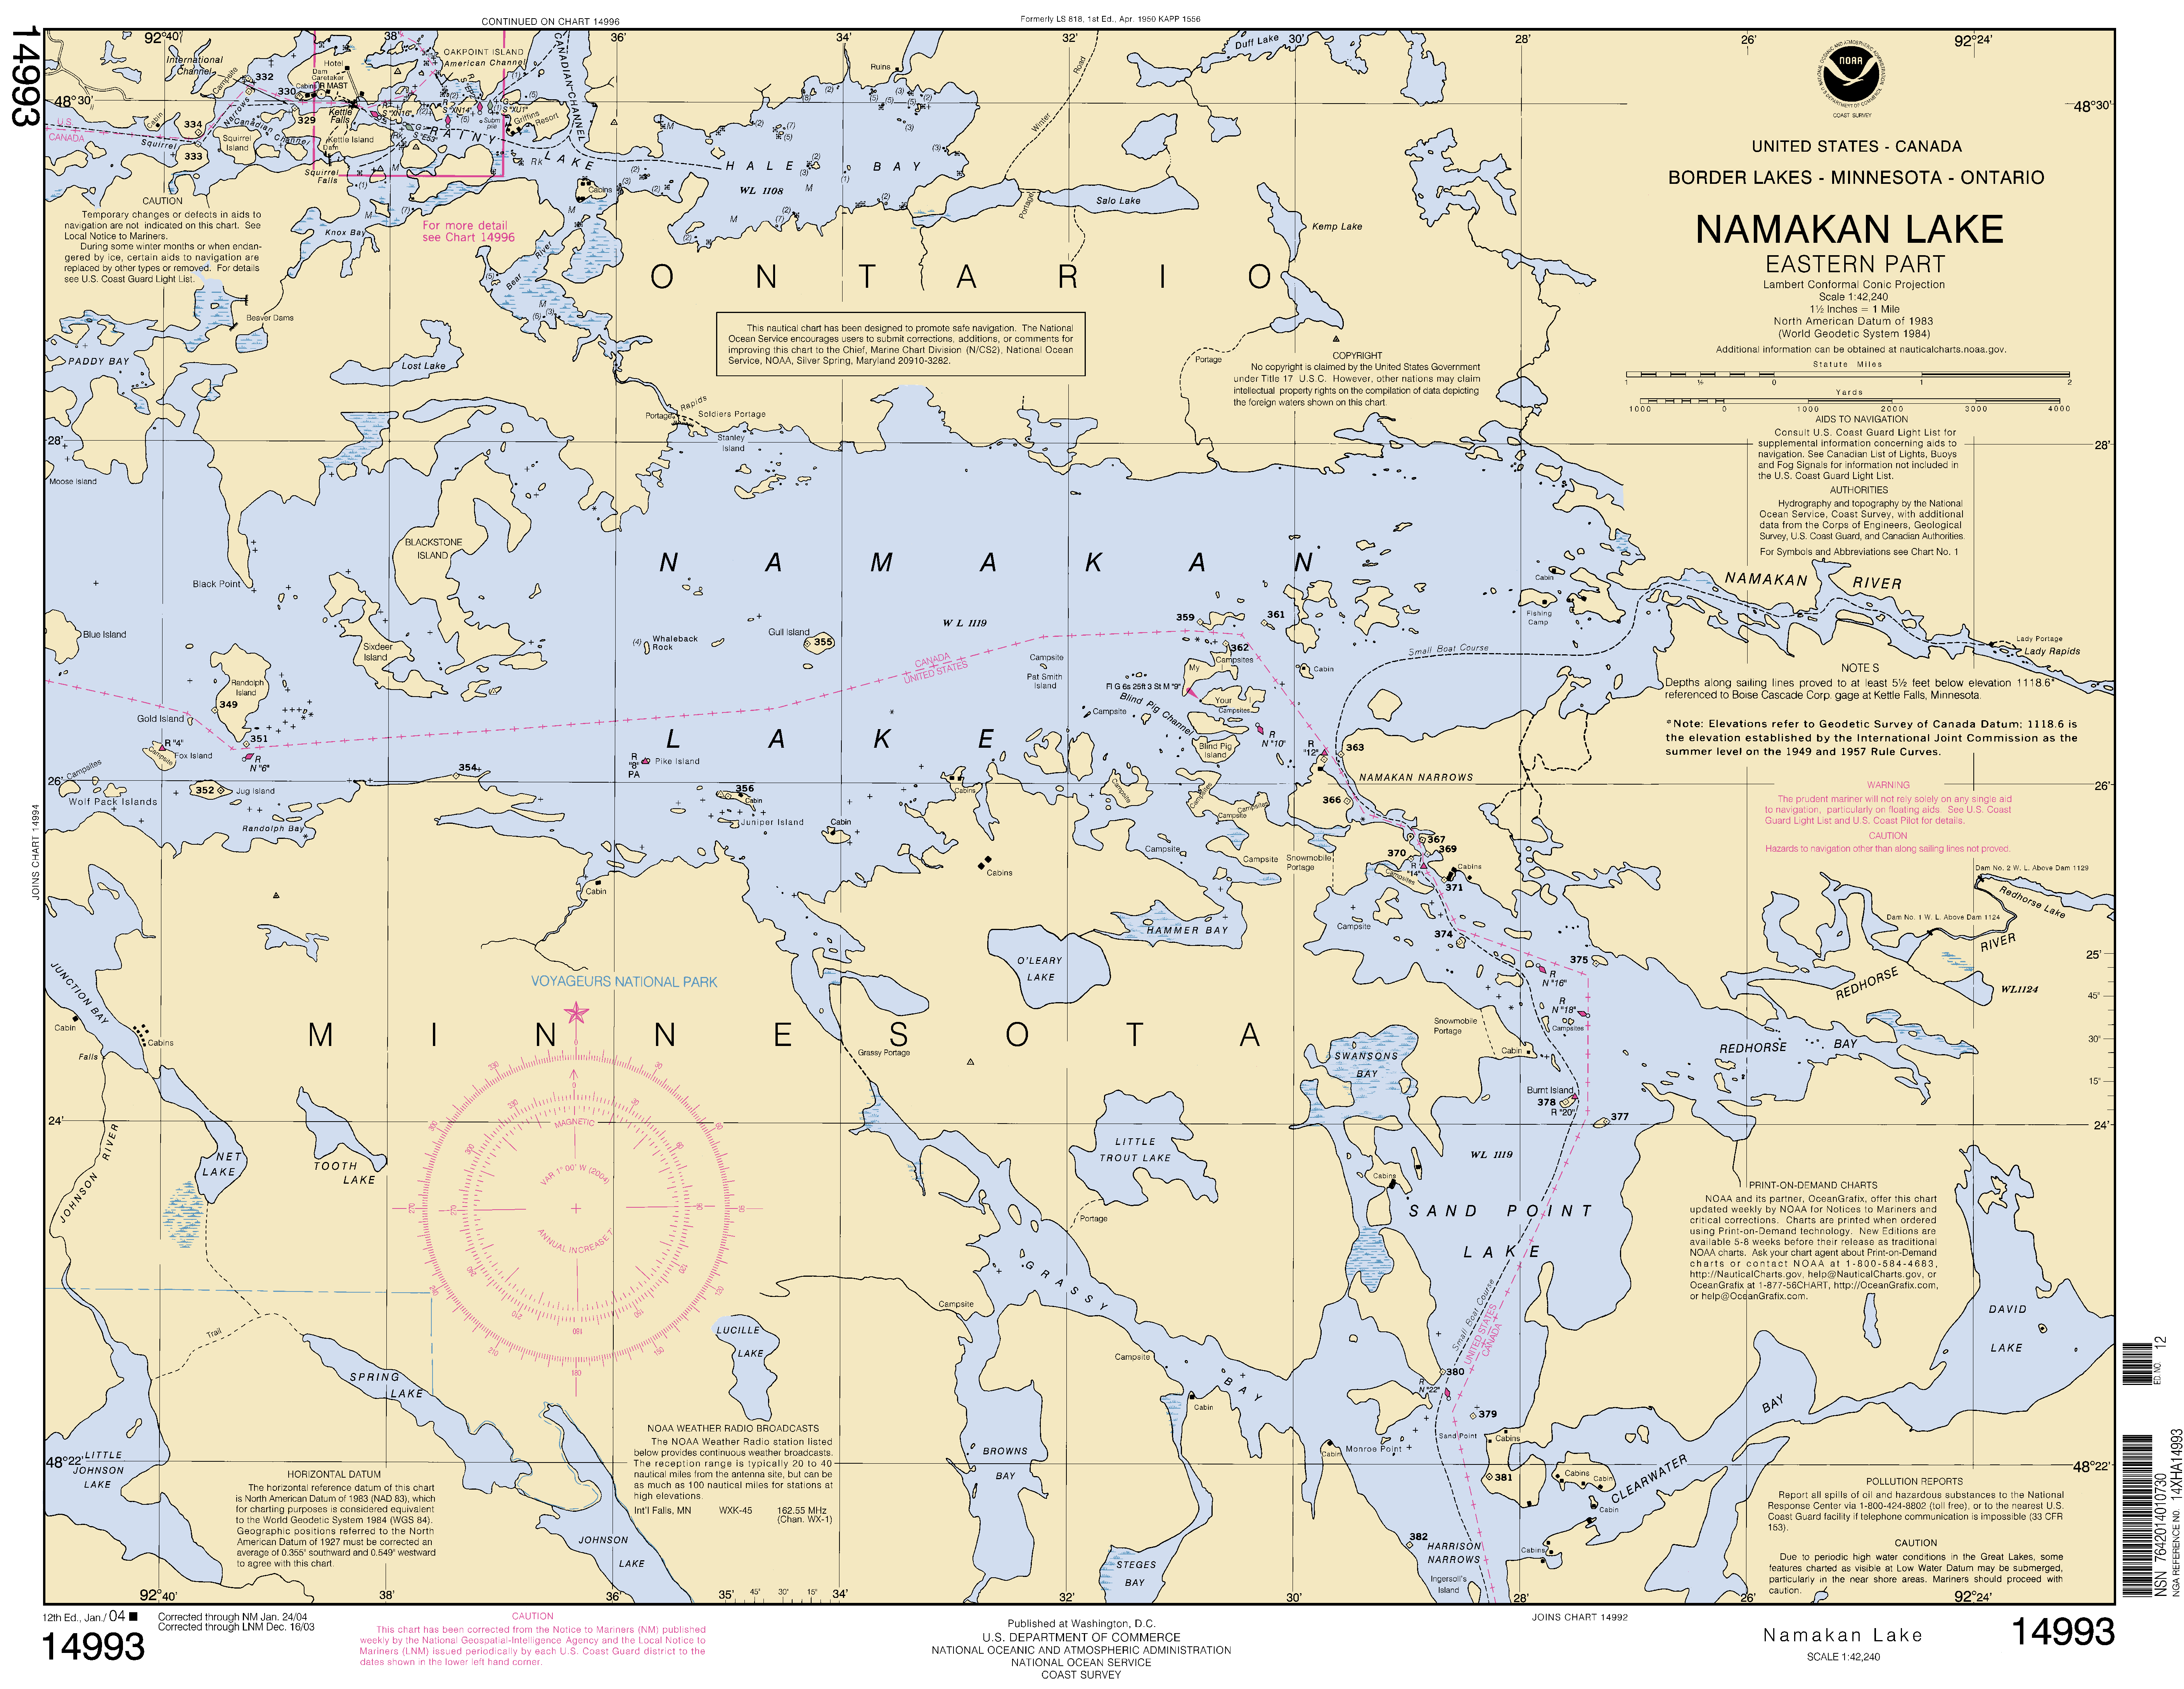 NAMAKAN LAKE nautical chart - ΝΟΑΑ Charts - maps.